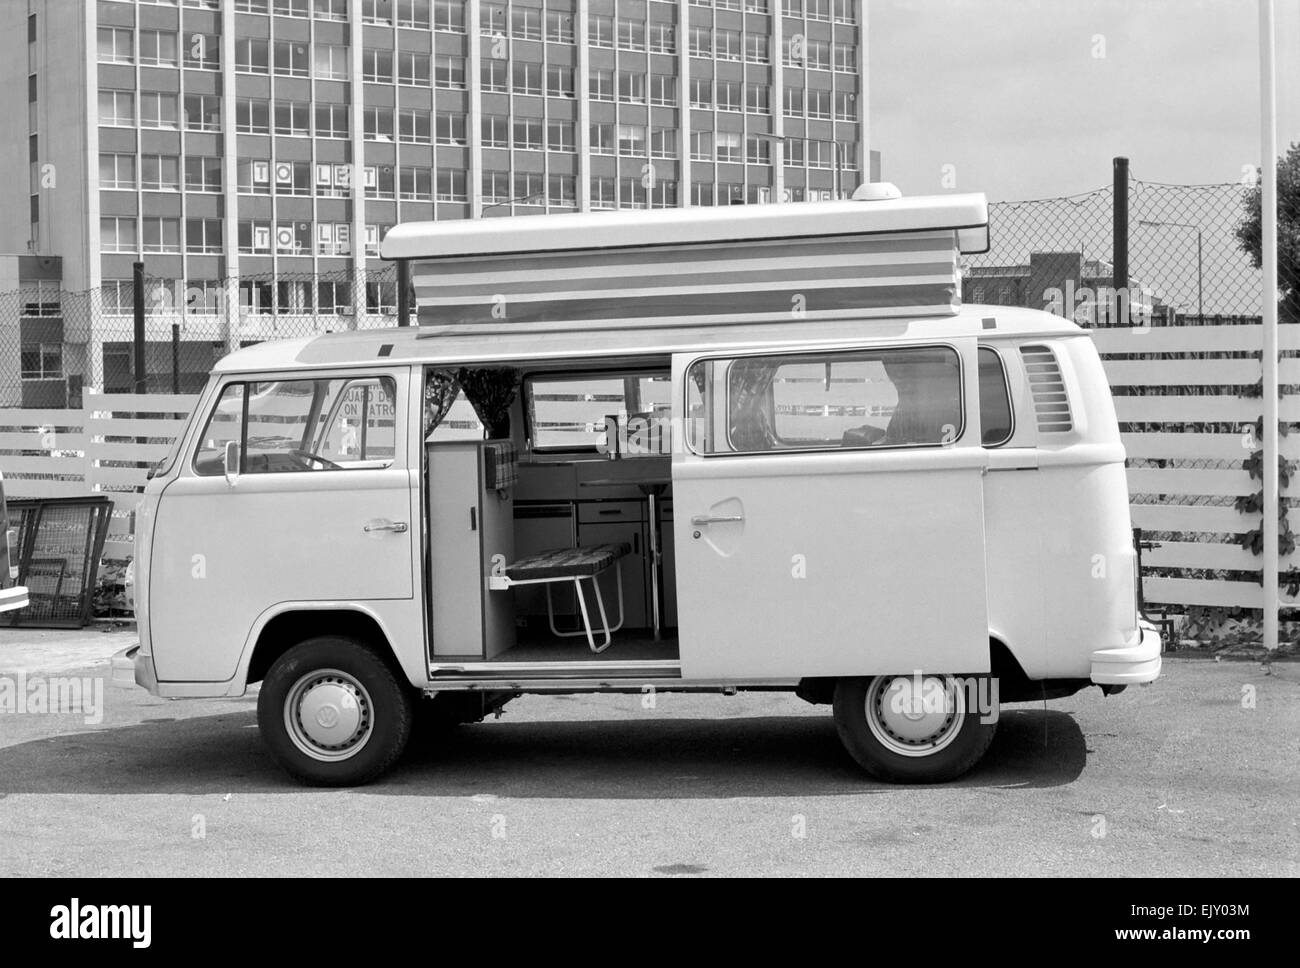 Volkswagen Devon Moonraker autocaravan. Agosto 1978 78-3944-005.Caption locale *** planman - - 03/02/2010 Foto Stock